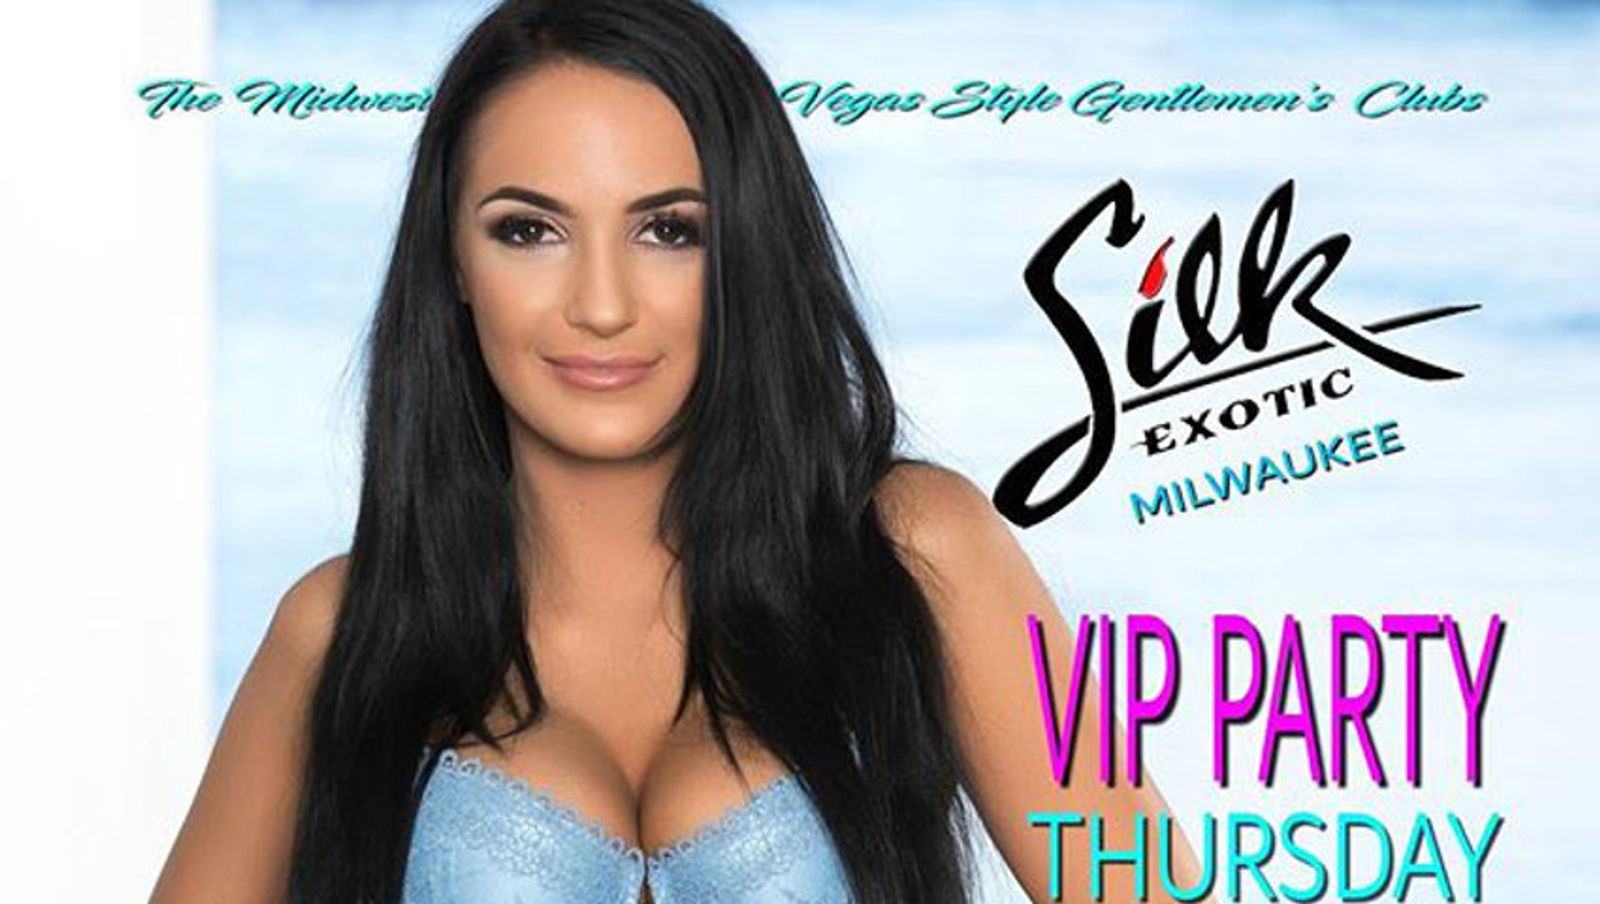 Sofi Ryan to Feature at Silk Exotic in Milwaukee Tonight